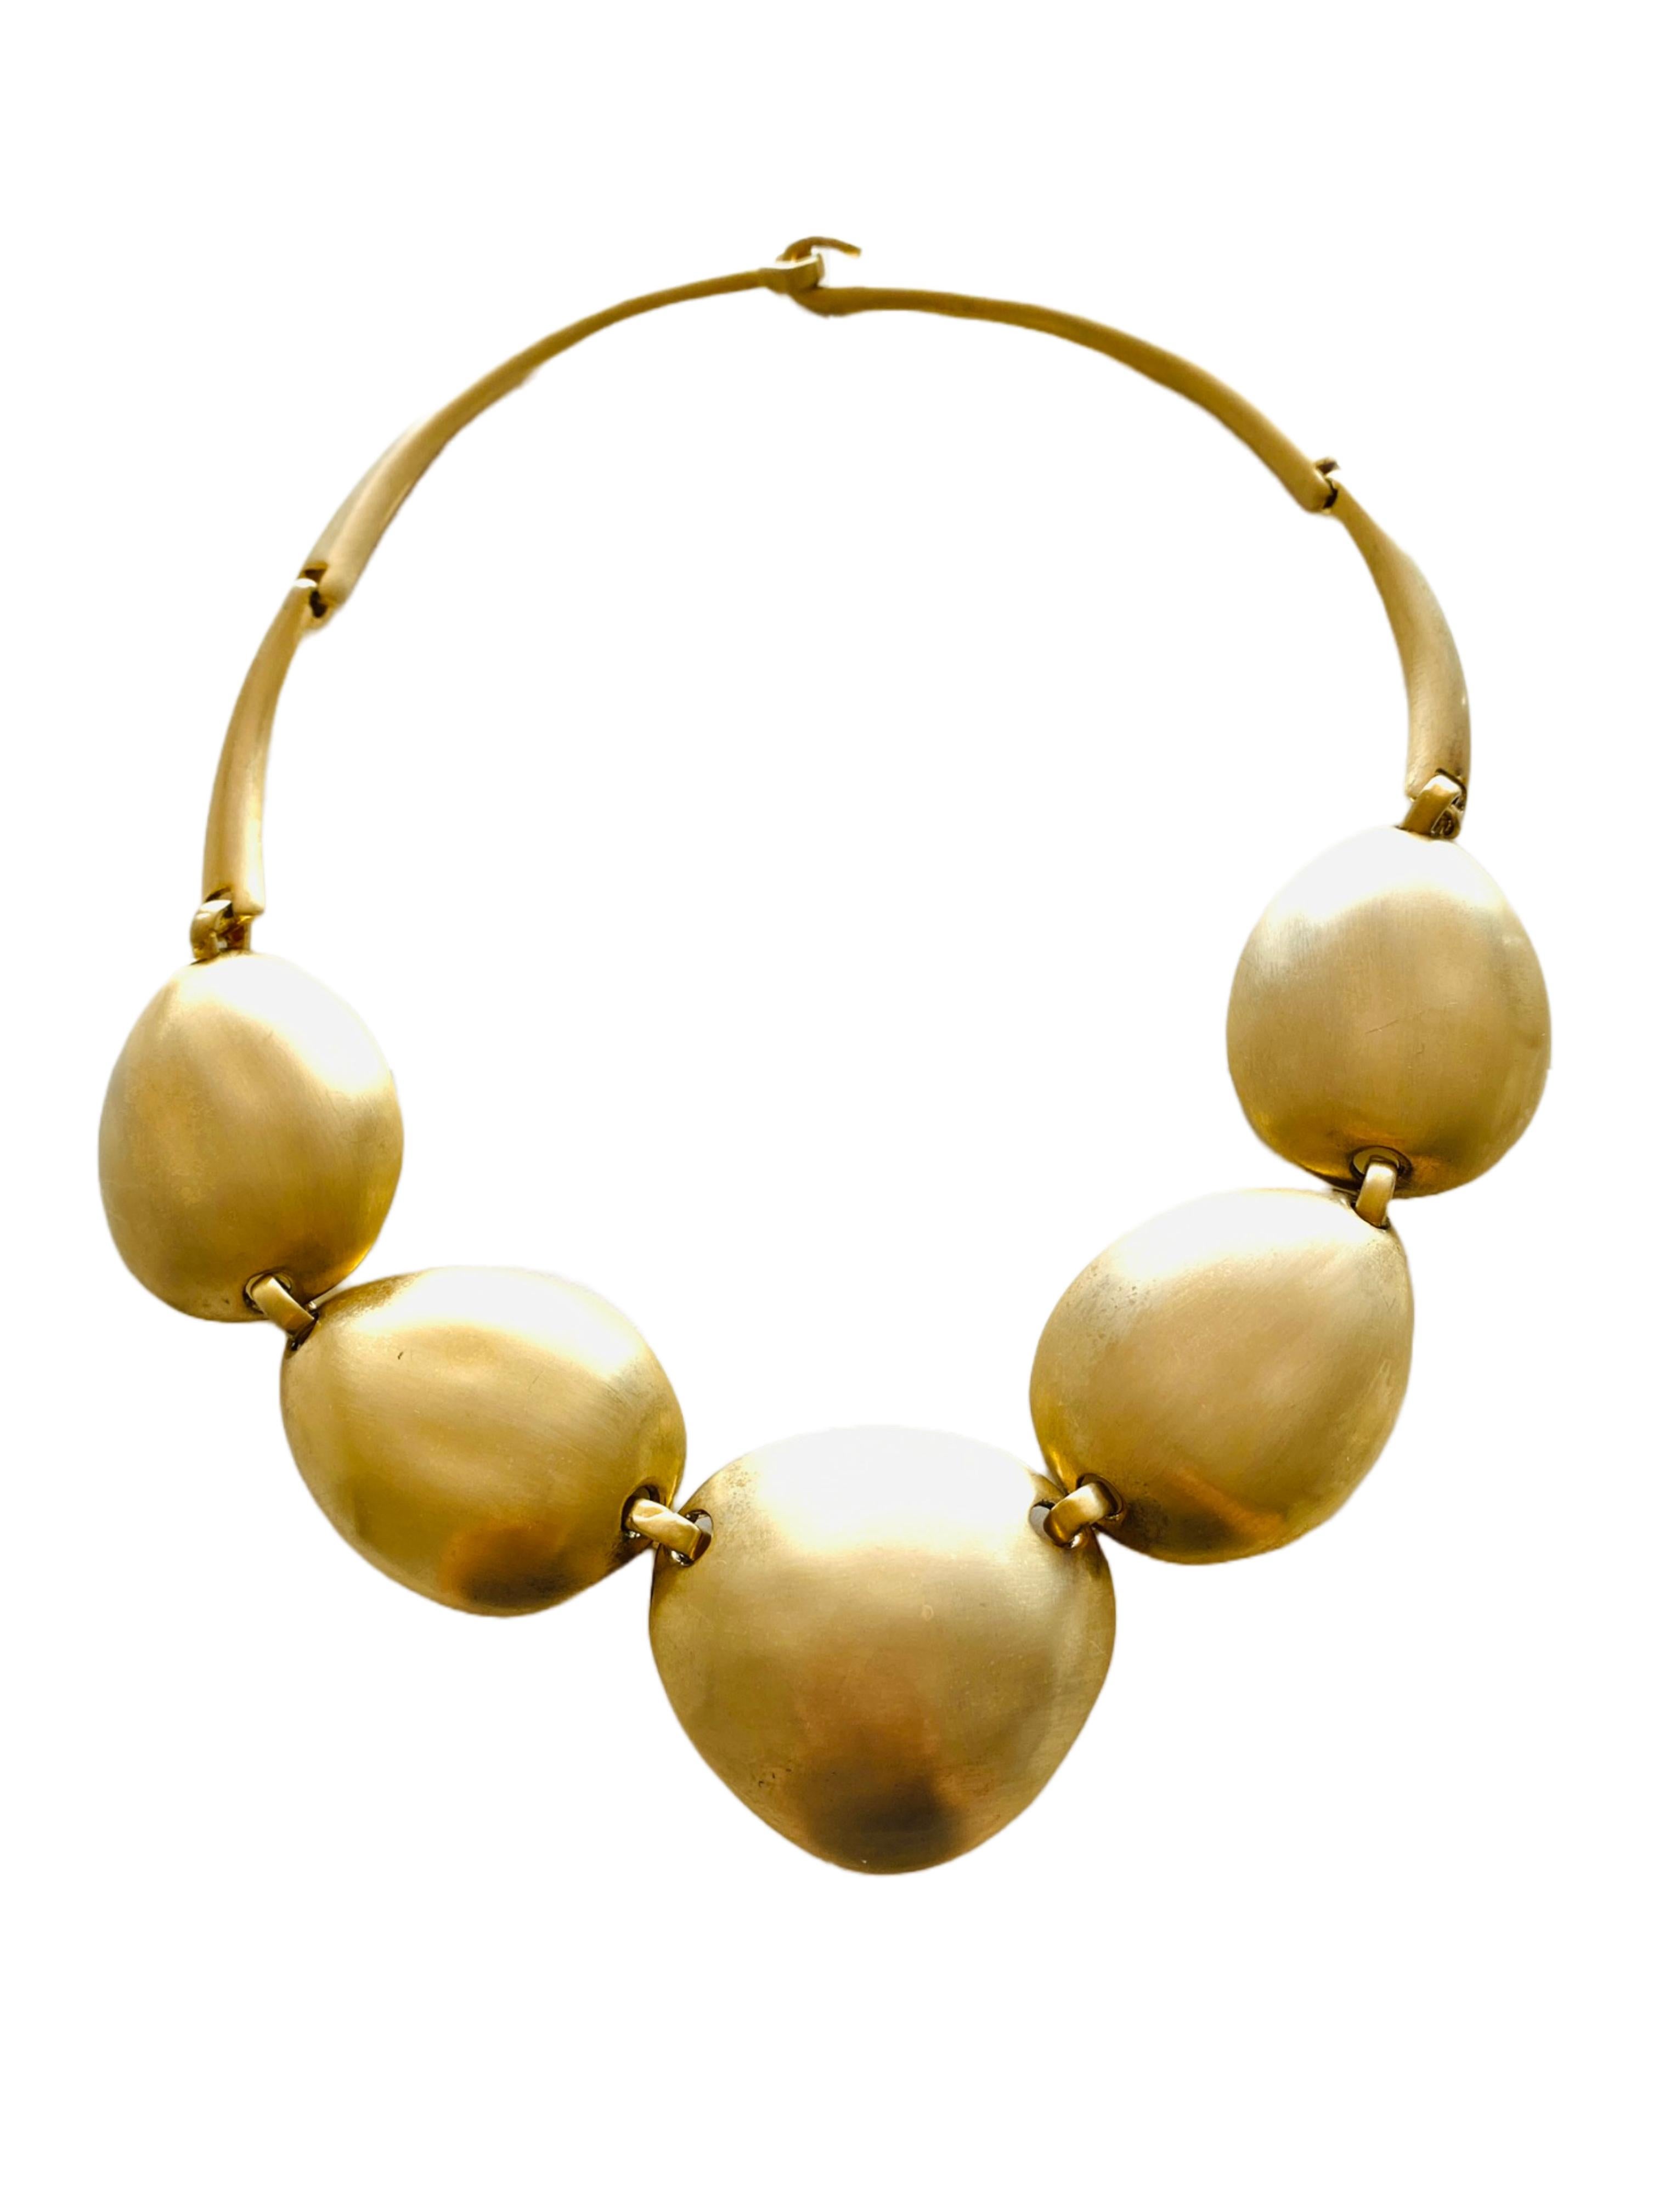 Stylish Les Bernard gold hinged cuff bracelet and necklace set with a pale satin brushed finish.

Bracelet Size: It measures 2.5